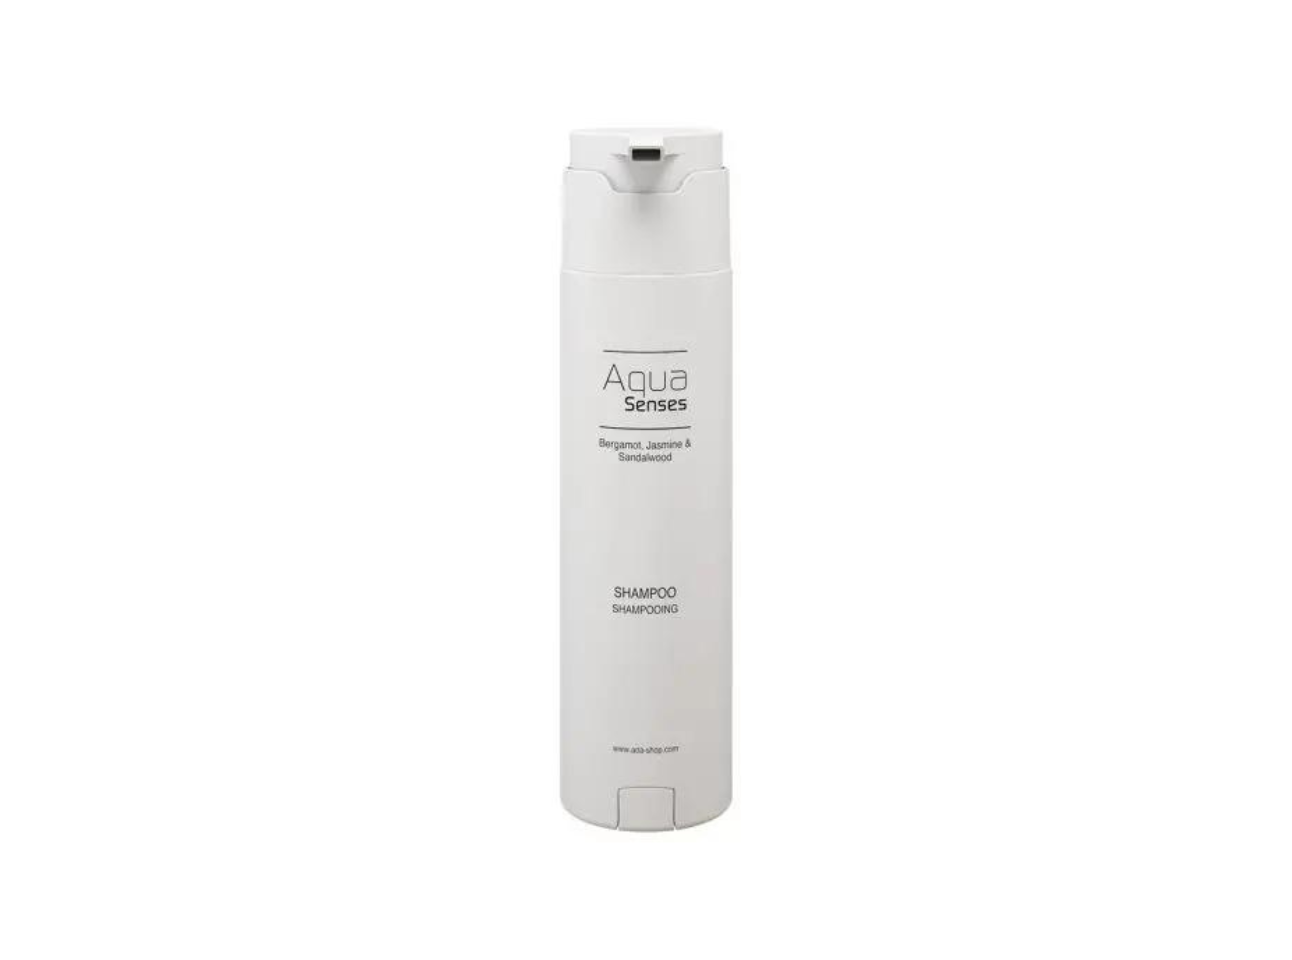 Aqua Senses - Shampoo, SHAPE-Spender, 300 ml